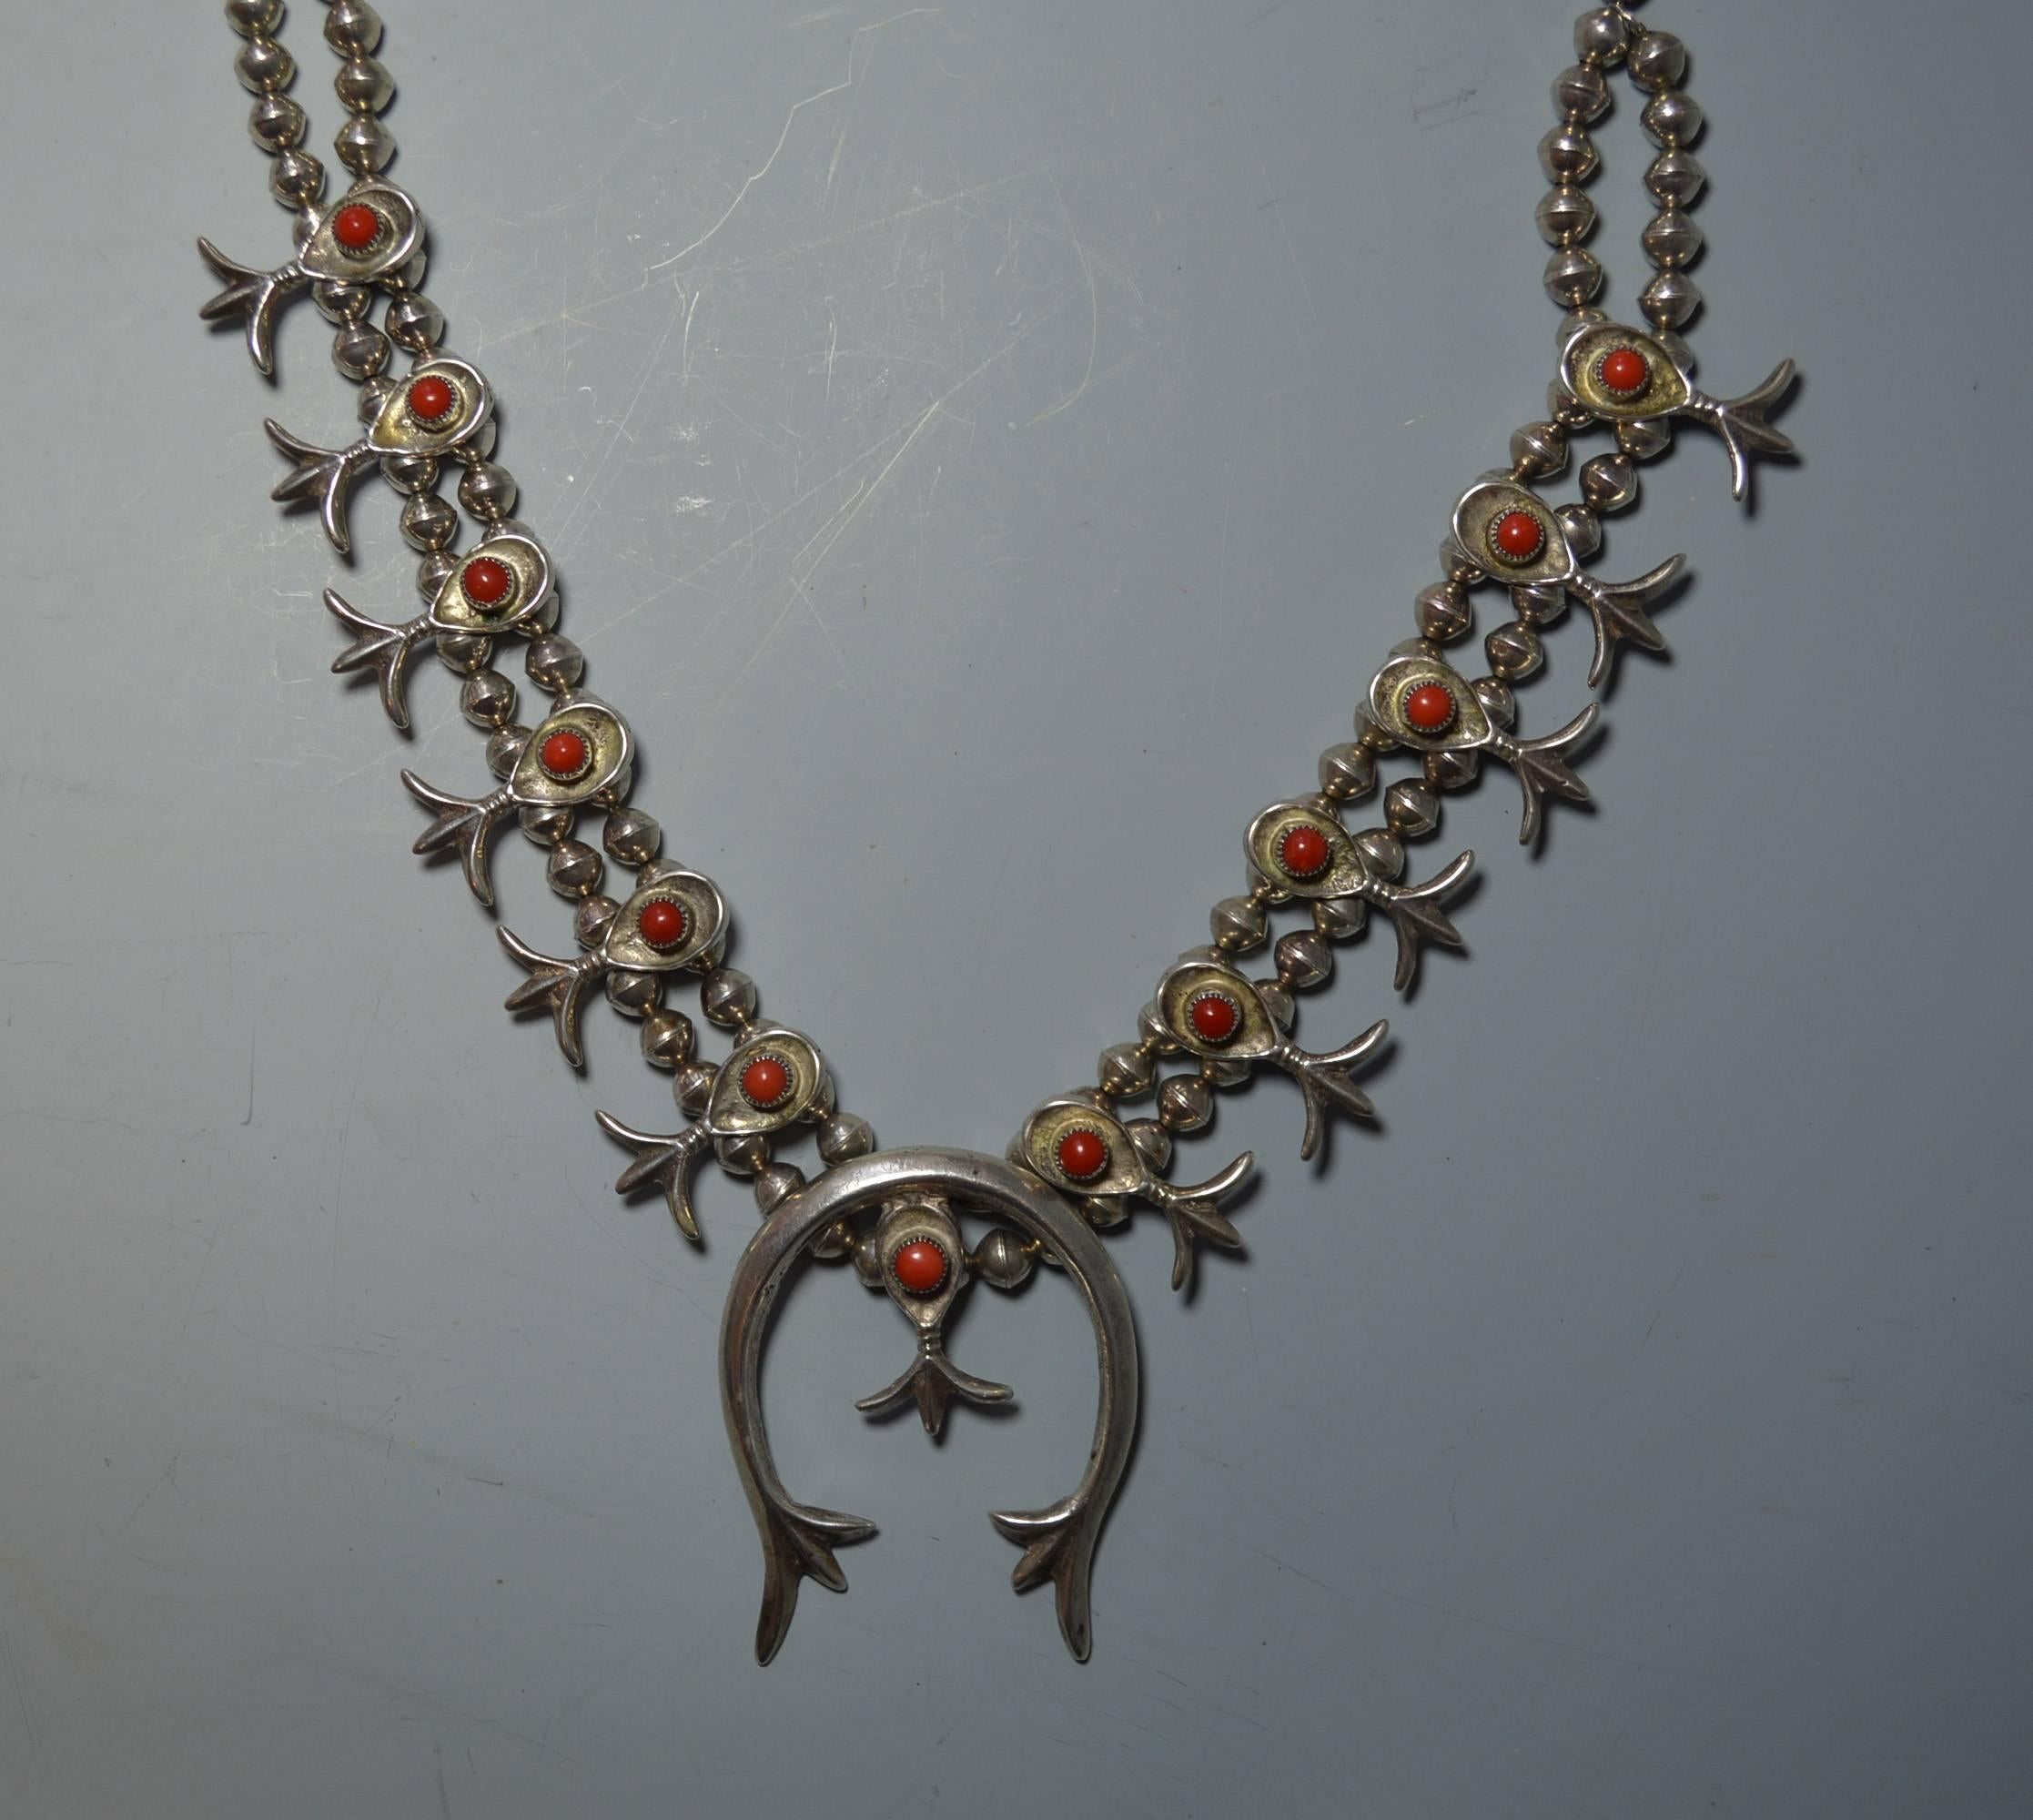 North American Native American Indian Fine Vintage Navajo Squash Blossom Necklace